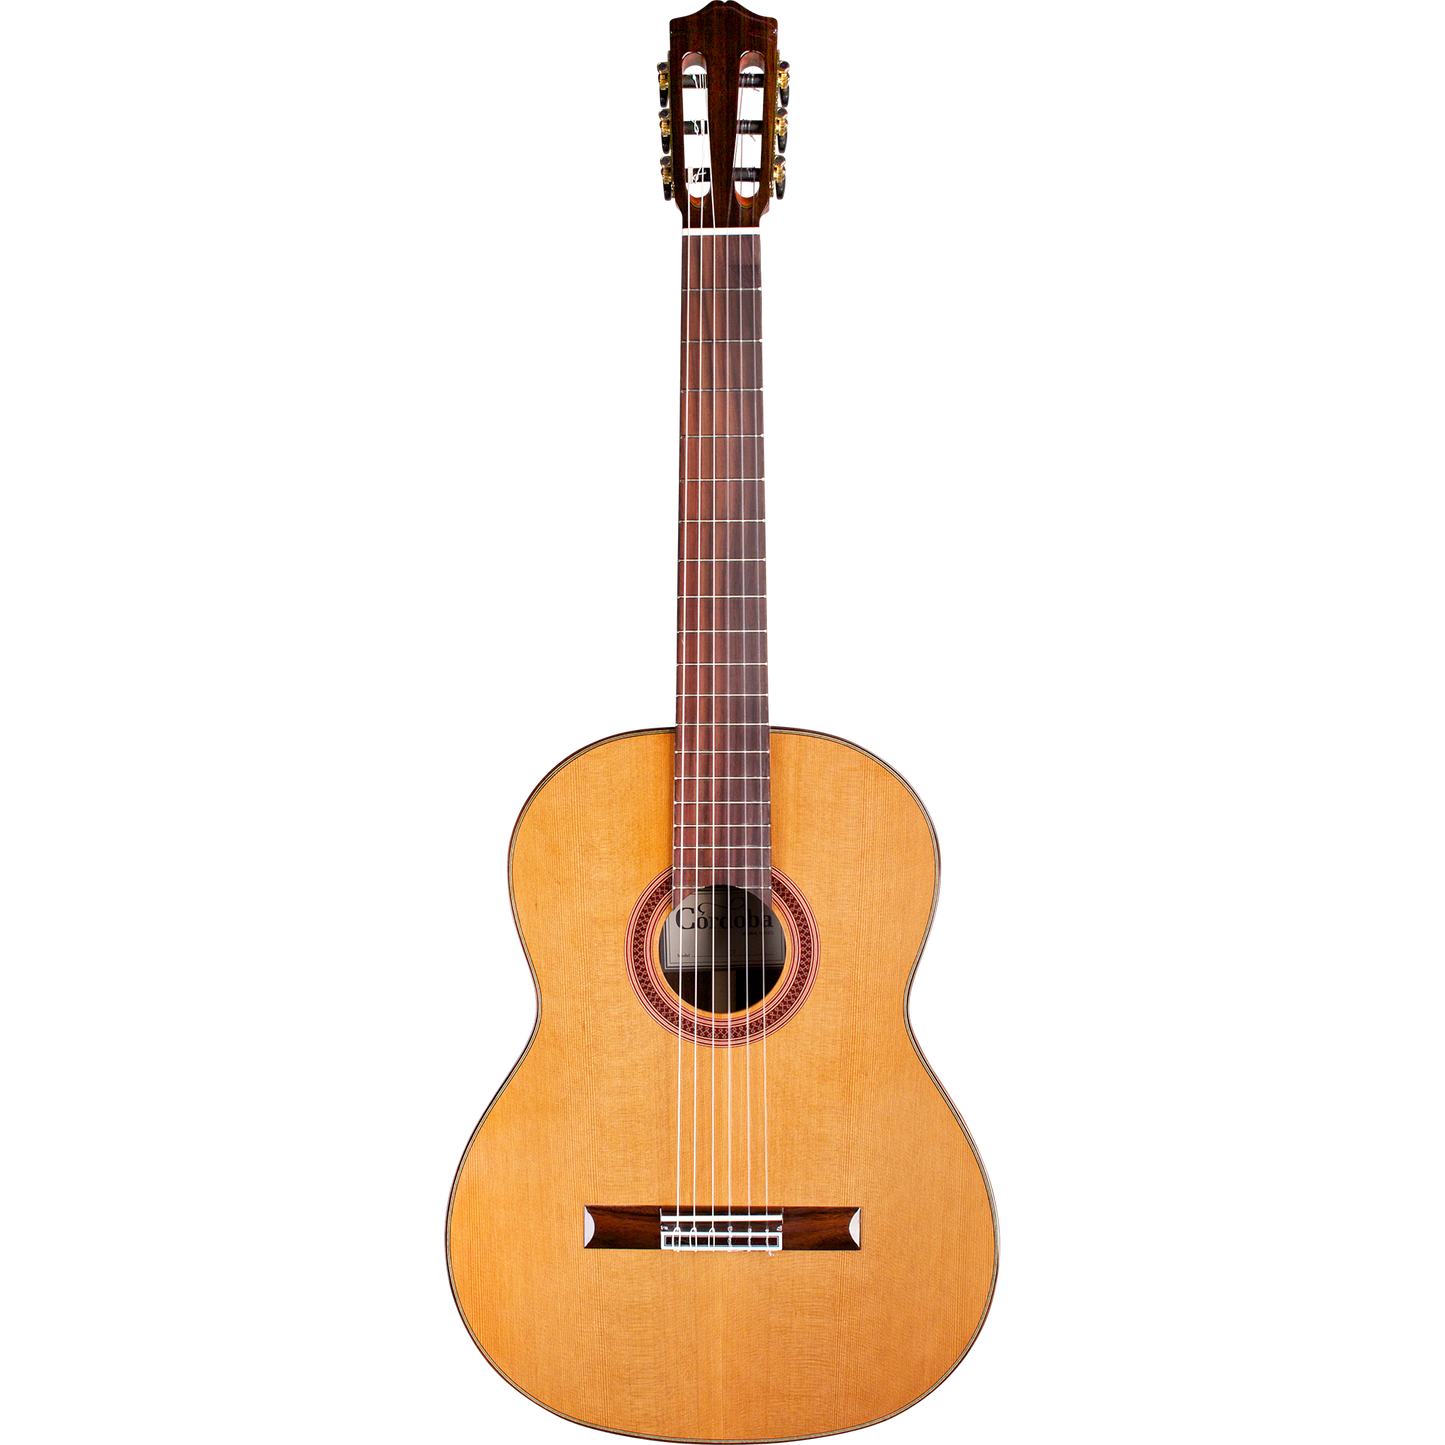 Cordoba C7 SP Classical Acoustic Guitar Spruce Top Natural Finish